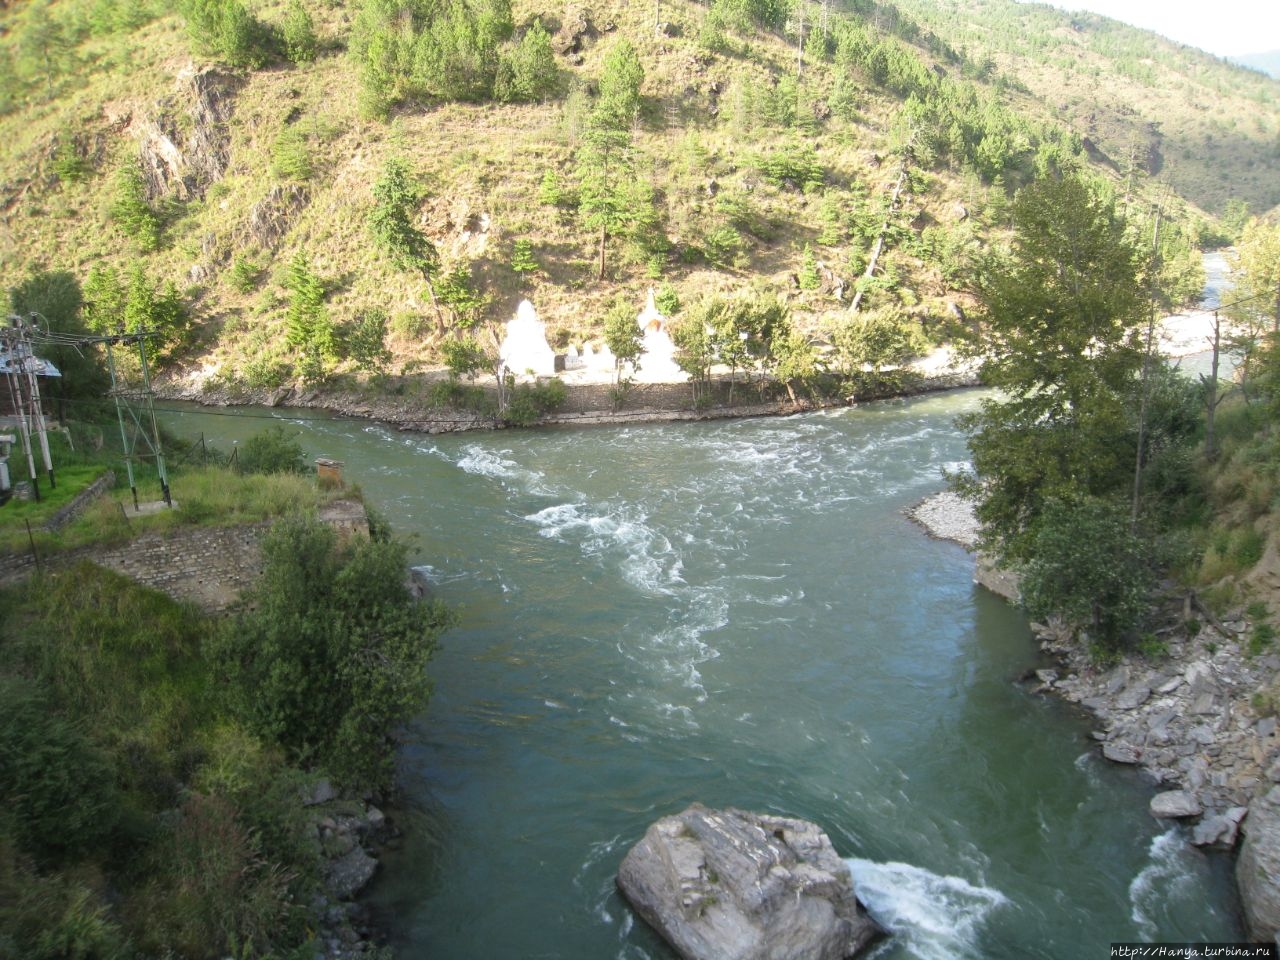 Чусом — место слияния двух рек Паро, Бутан